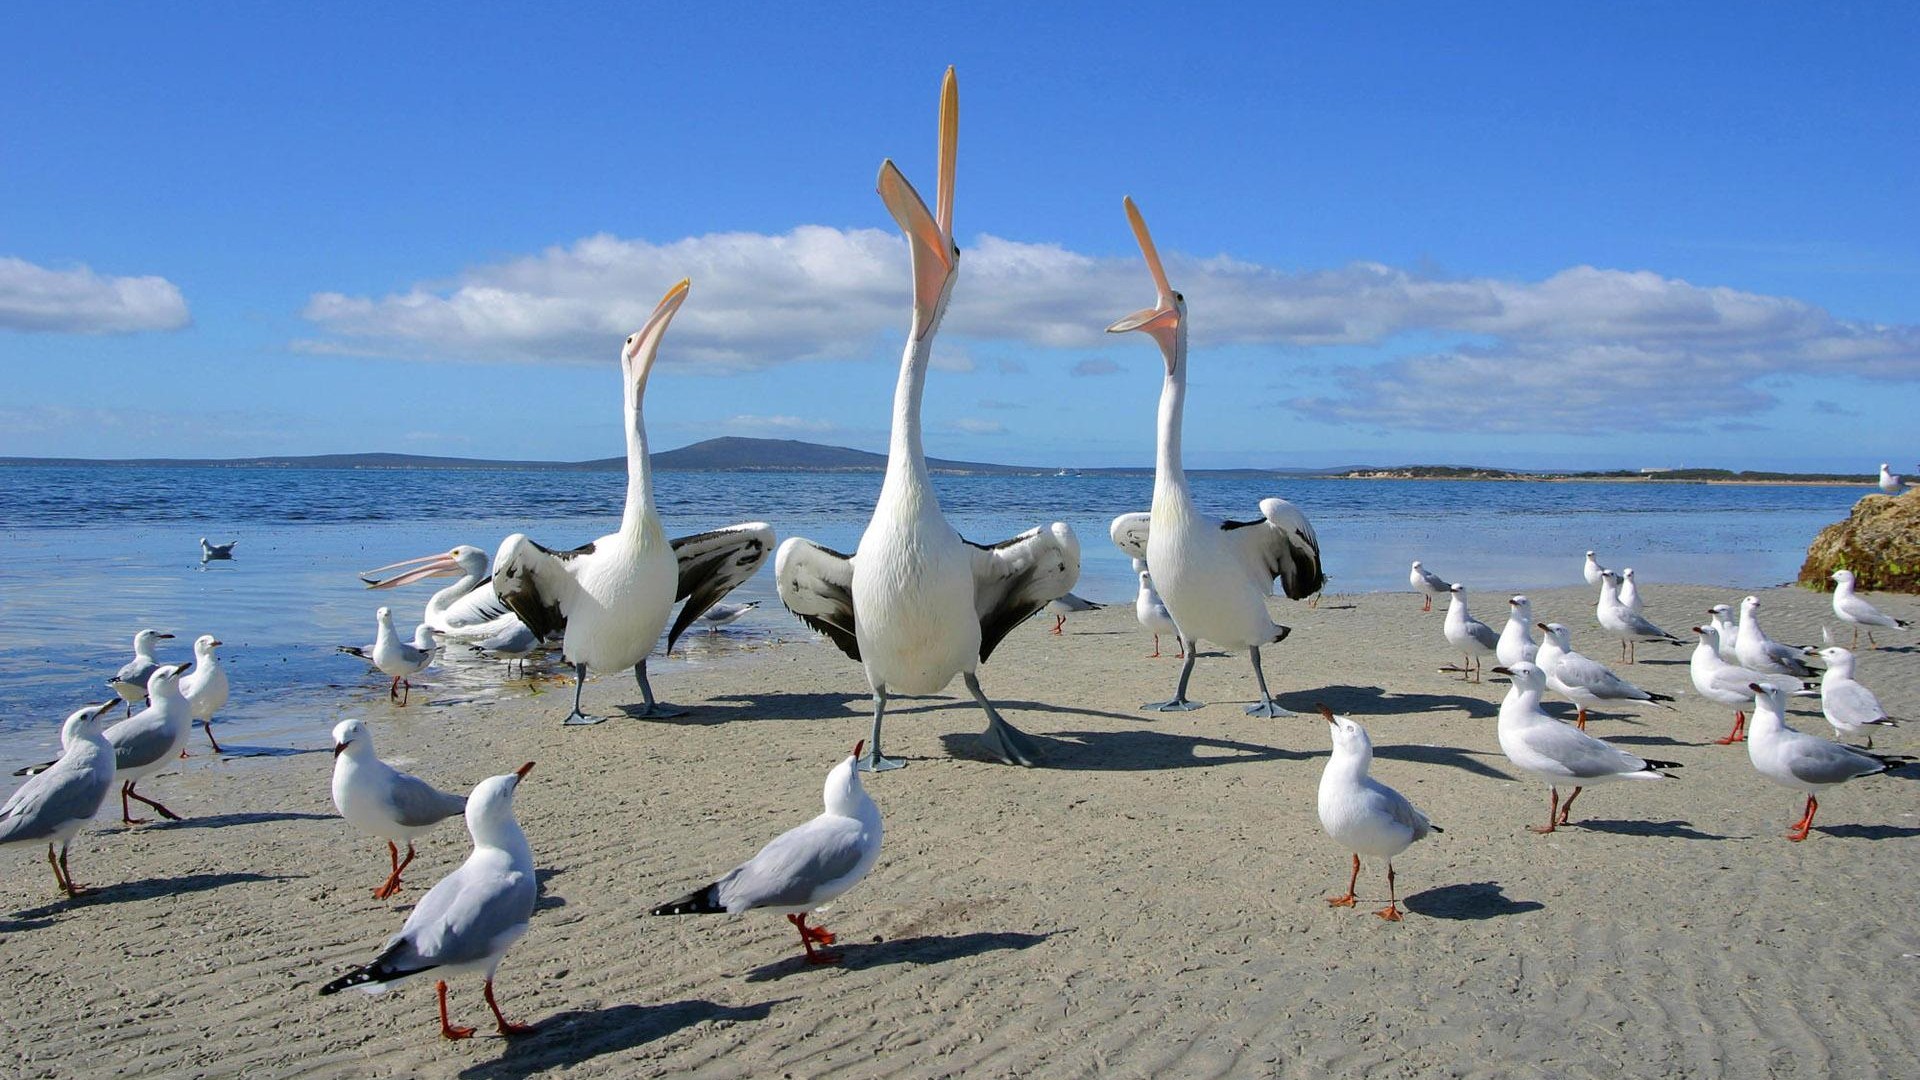 284002 Bild herunterladen tiere, pelikan, strand, vogel, seemöve, vögel - Hintergrundbilder und Bildschirmschoner kostenlos